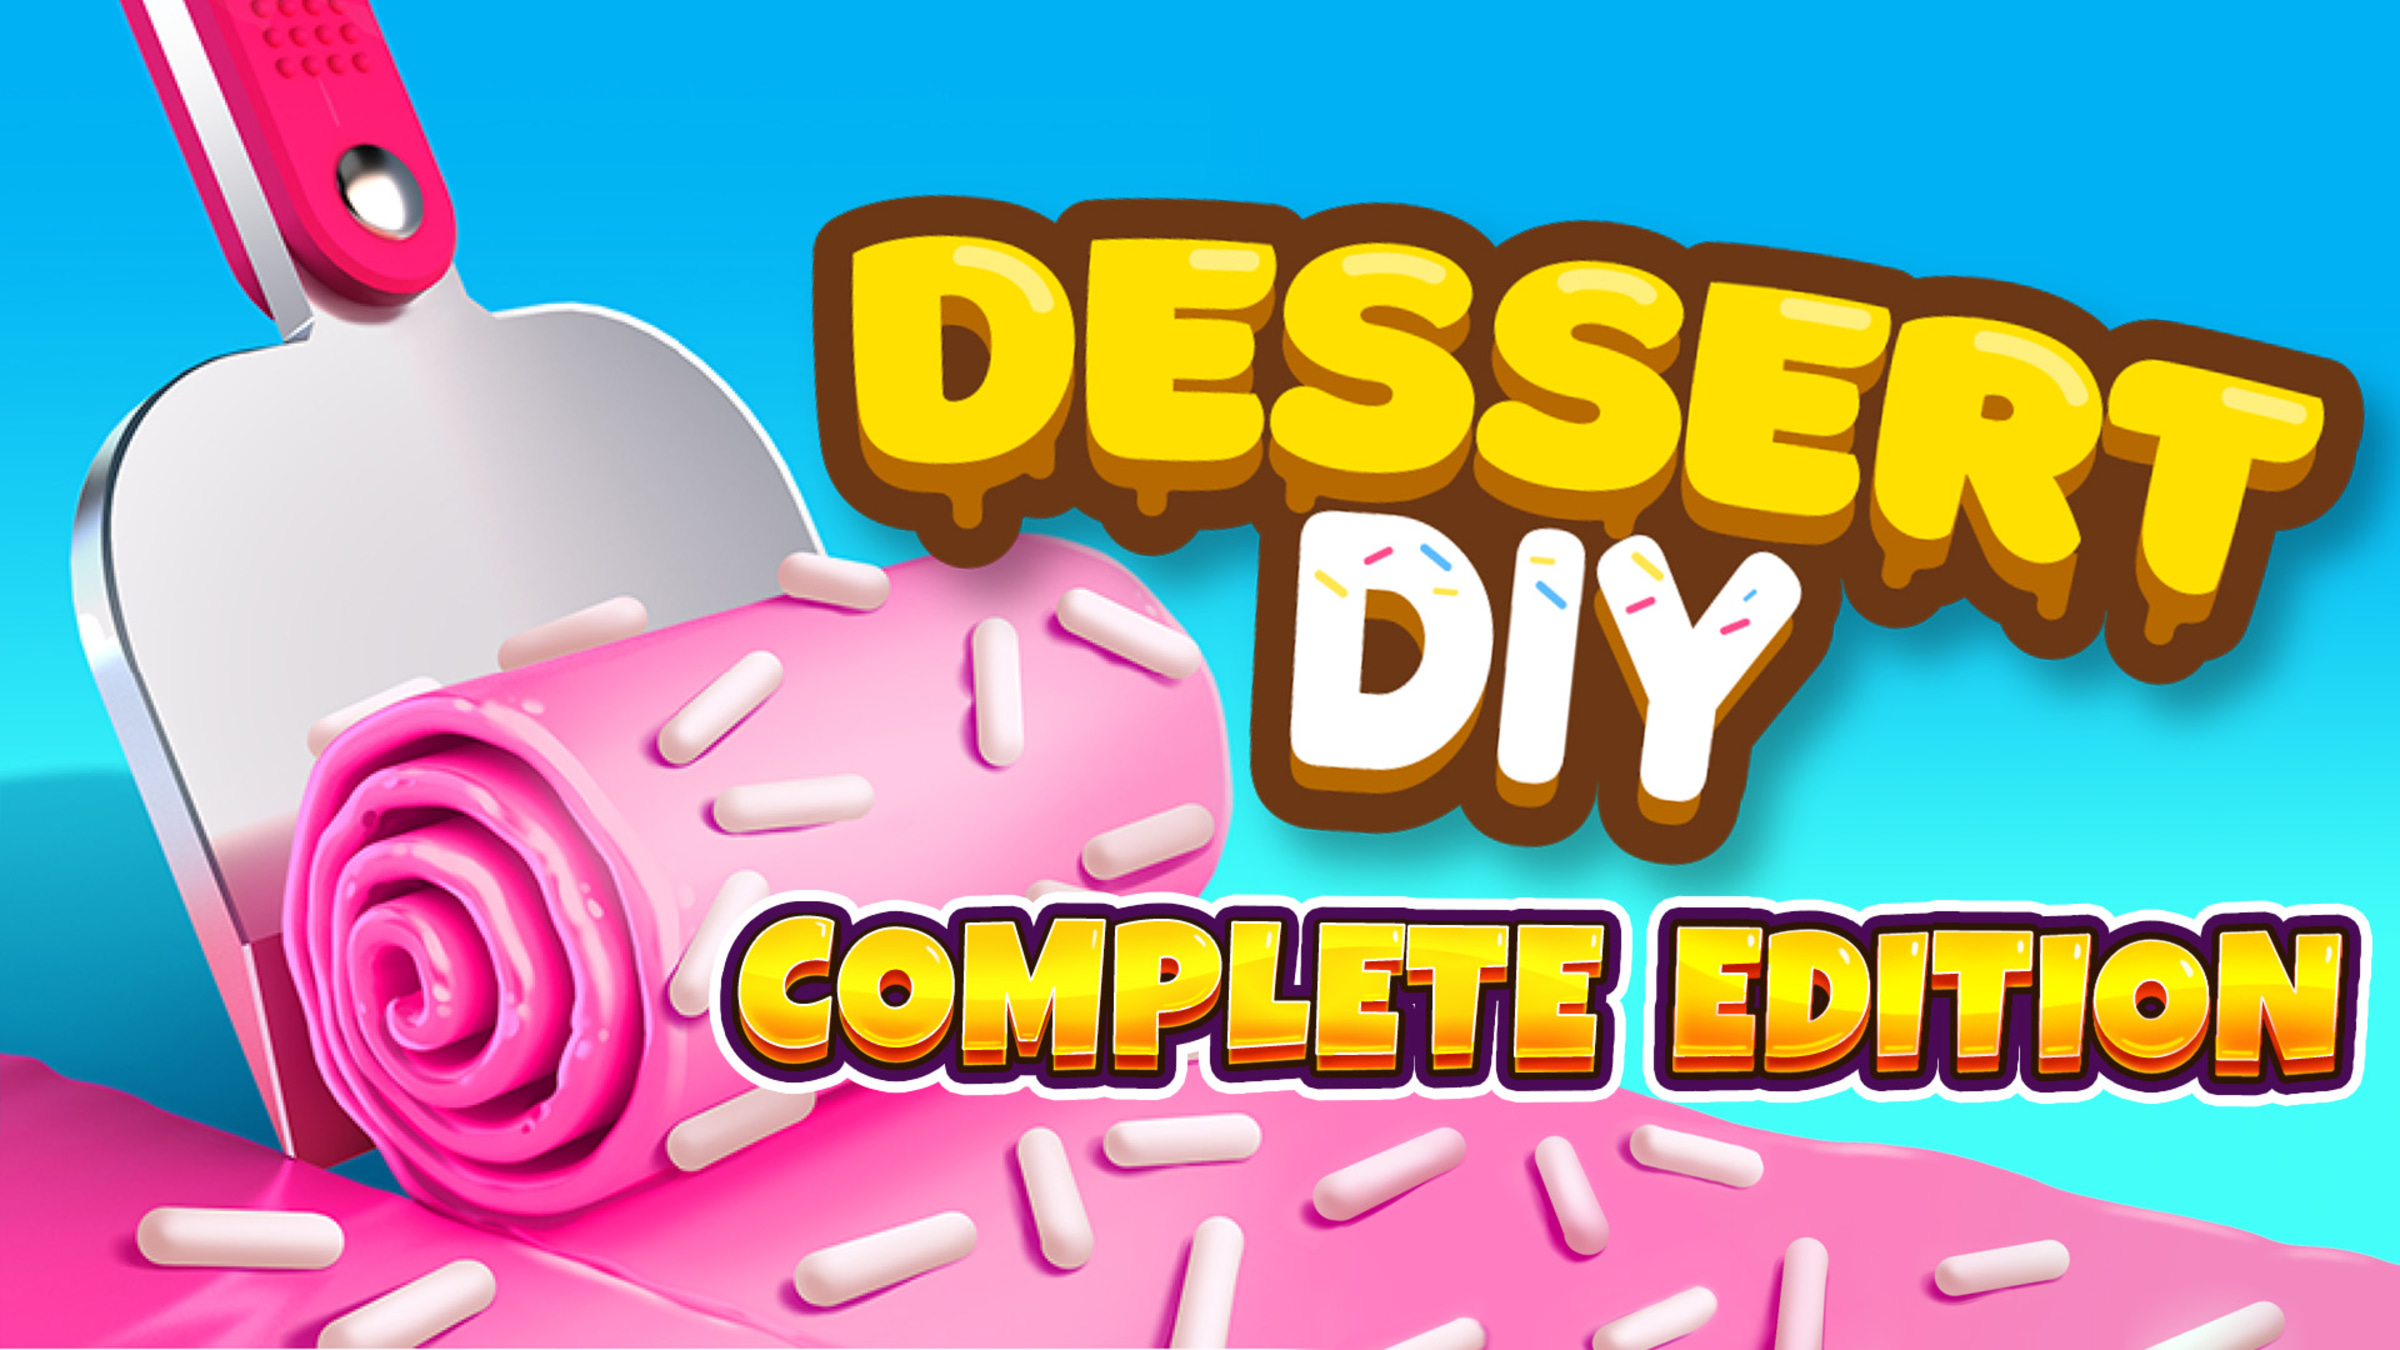 Dessert DIY: Complete Edition for Nintendo Switch - Nintendo ...